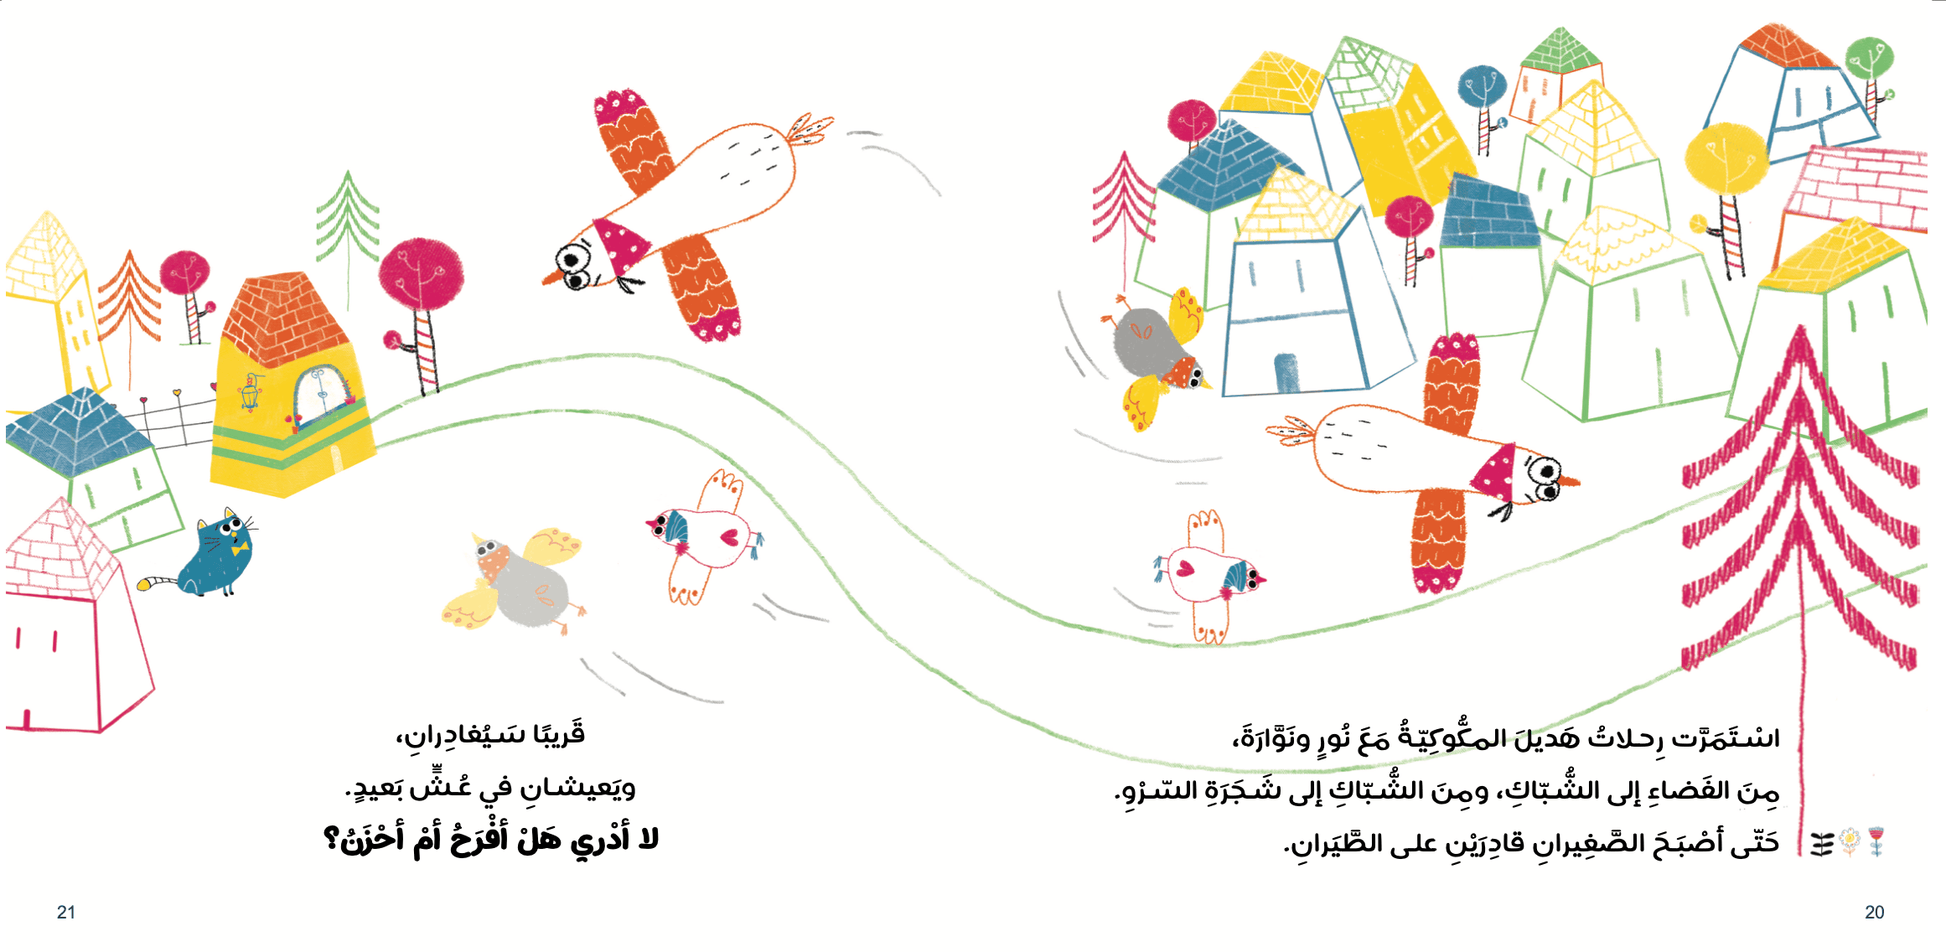 Hadeel and Asmer هديل وأسمر - Noon Books